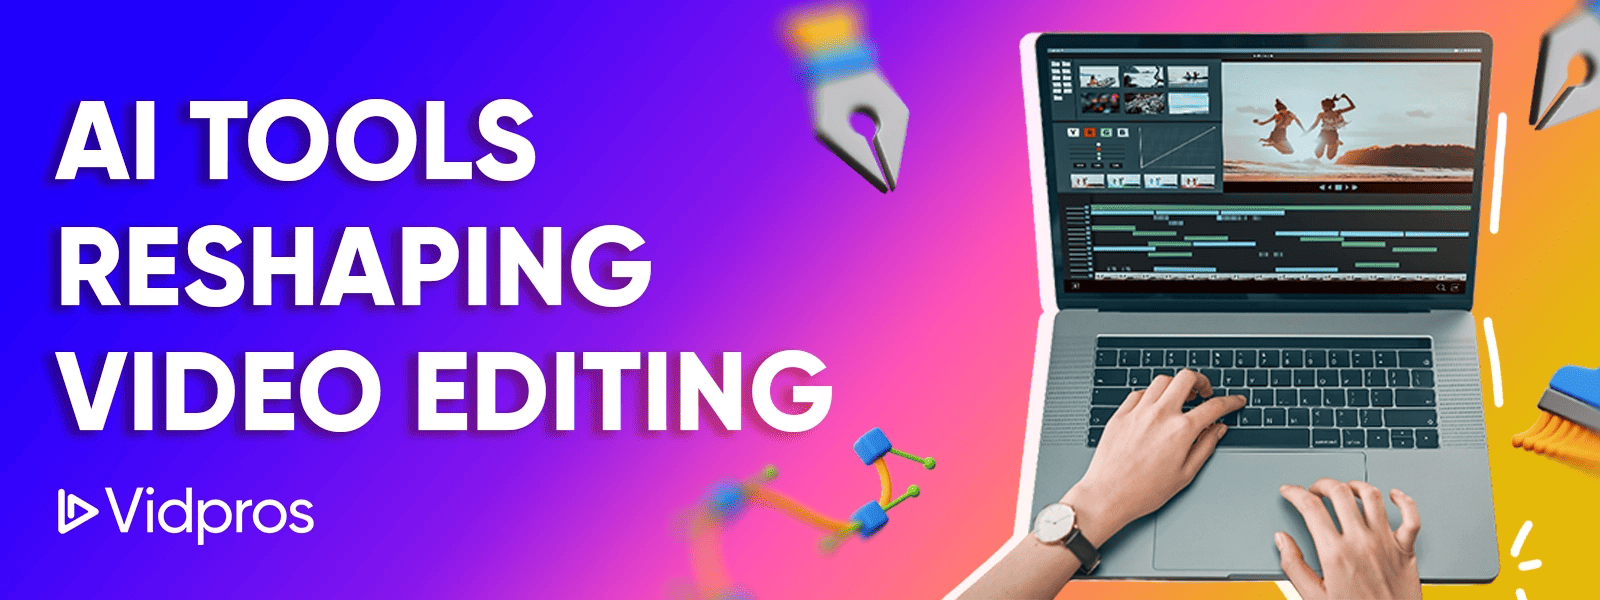 Video Editing using AI tools